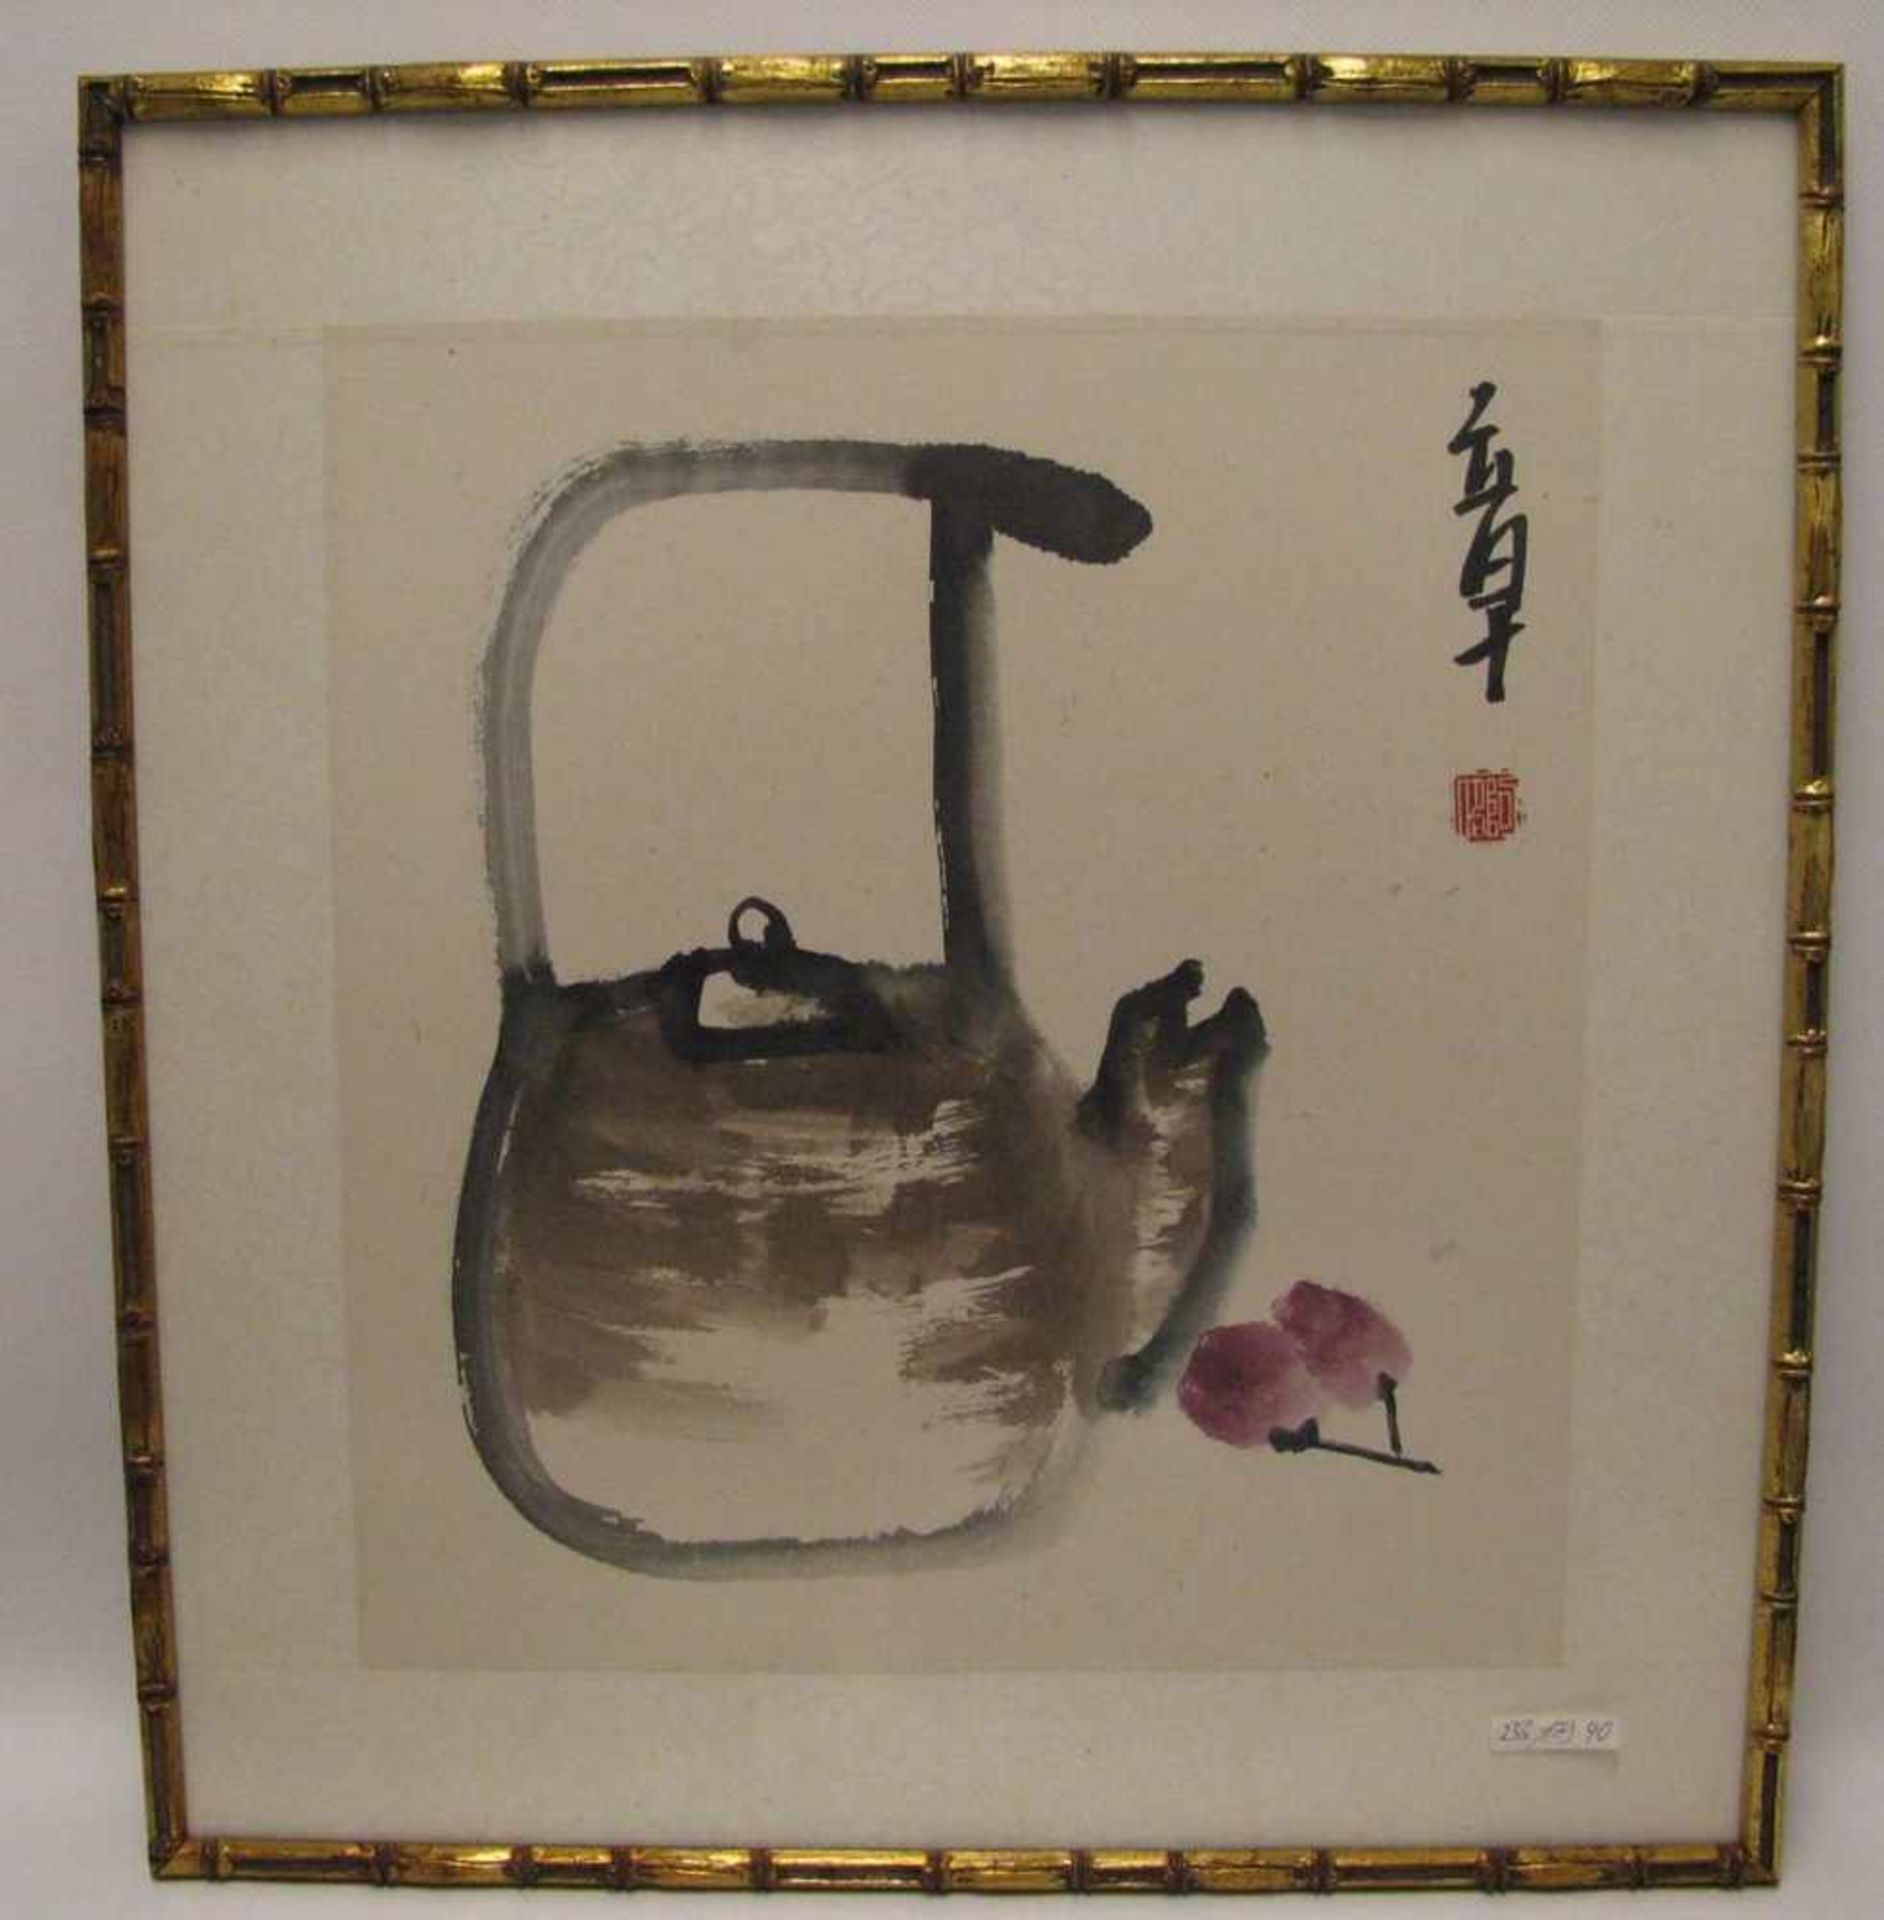 China, "Teekanne", re.o.sign., Aquarell, 59 x 46 cm, vergoldeter Rahmen.- - -19.00 % buyer's premium